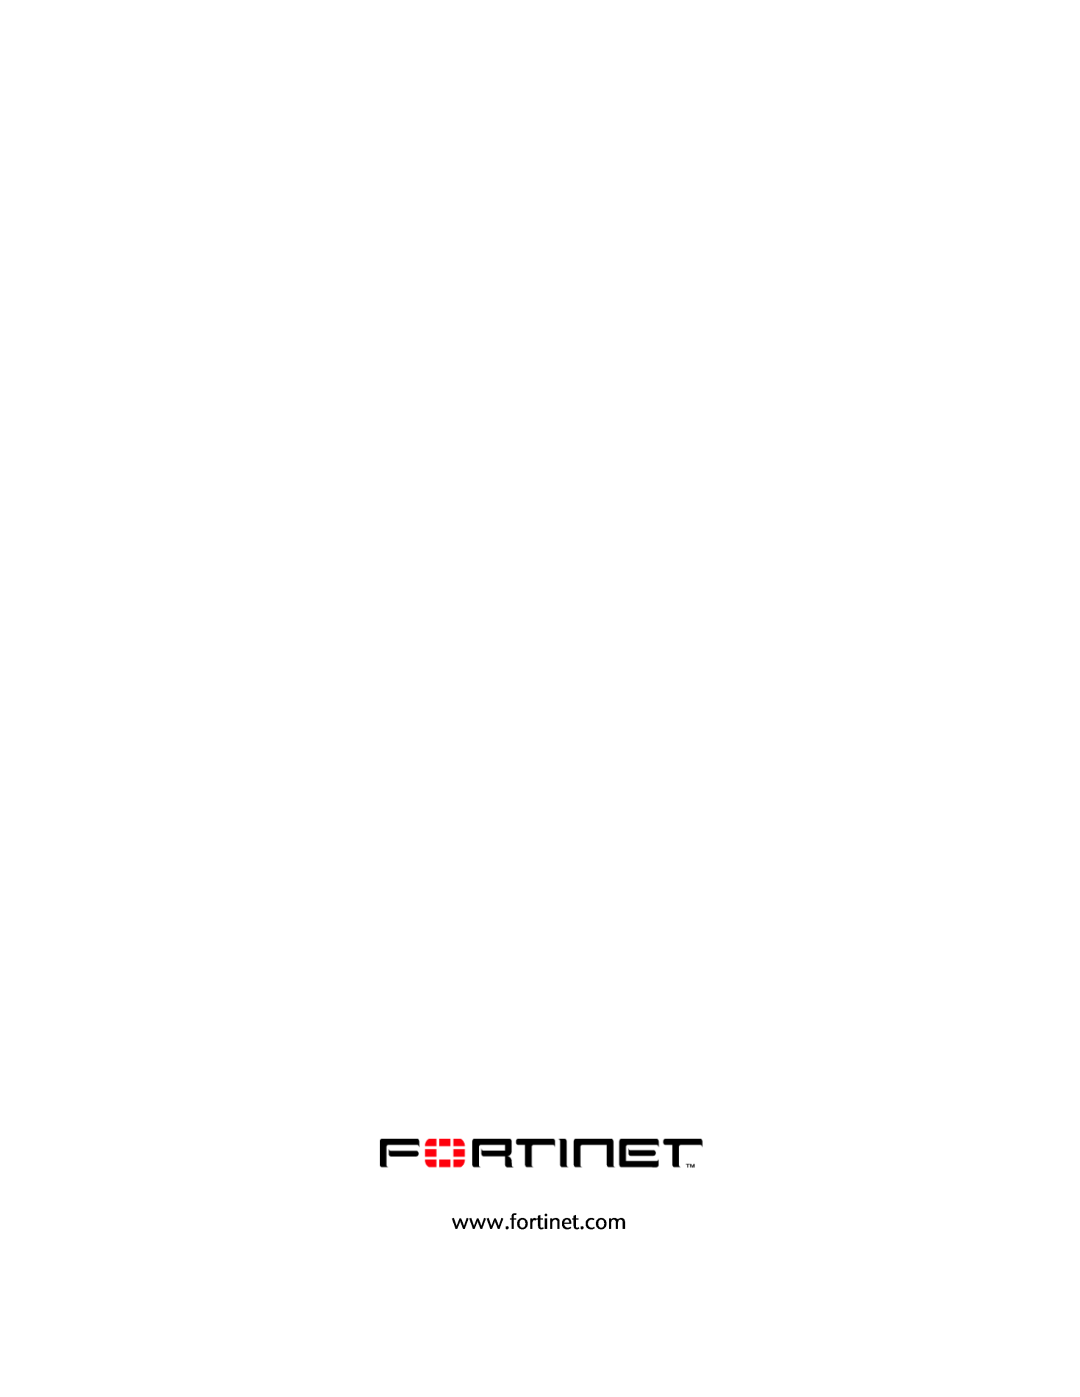 Fortinet 1.2.0 manual 